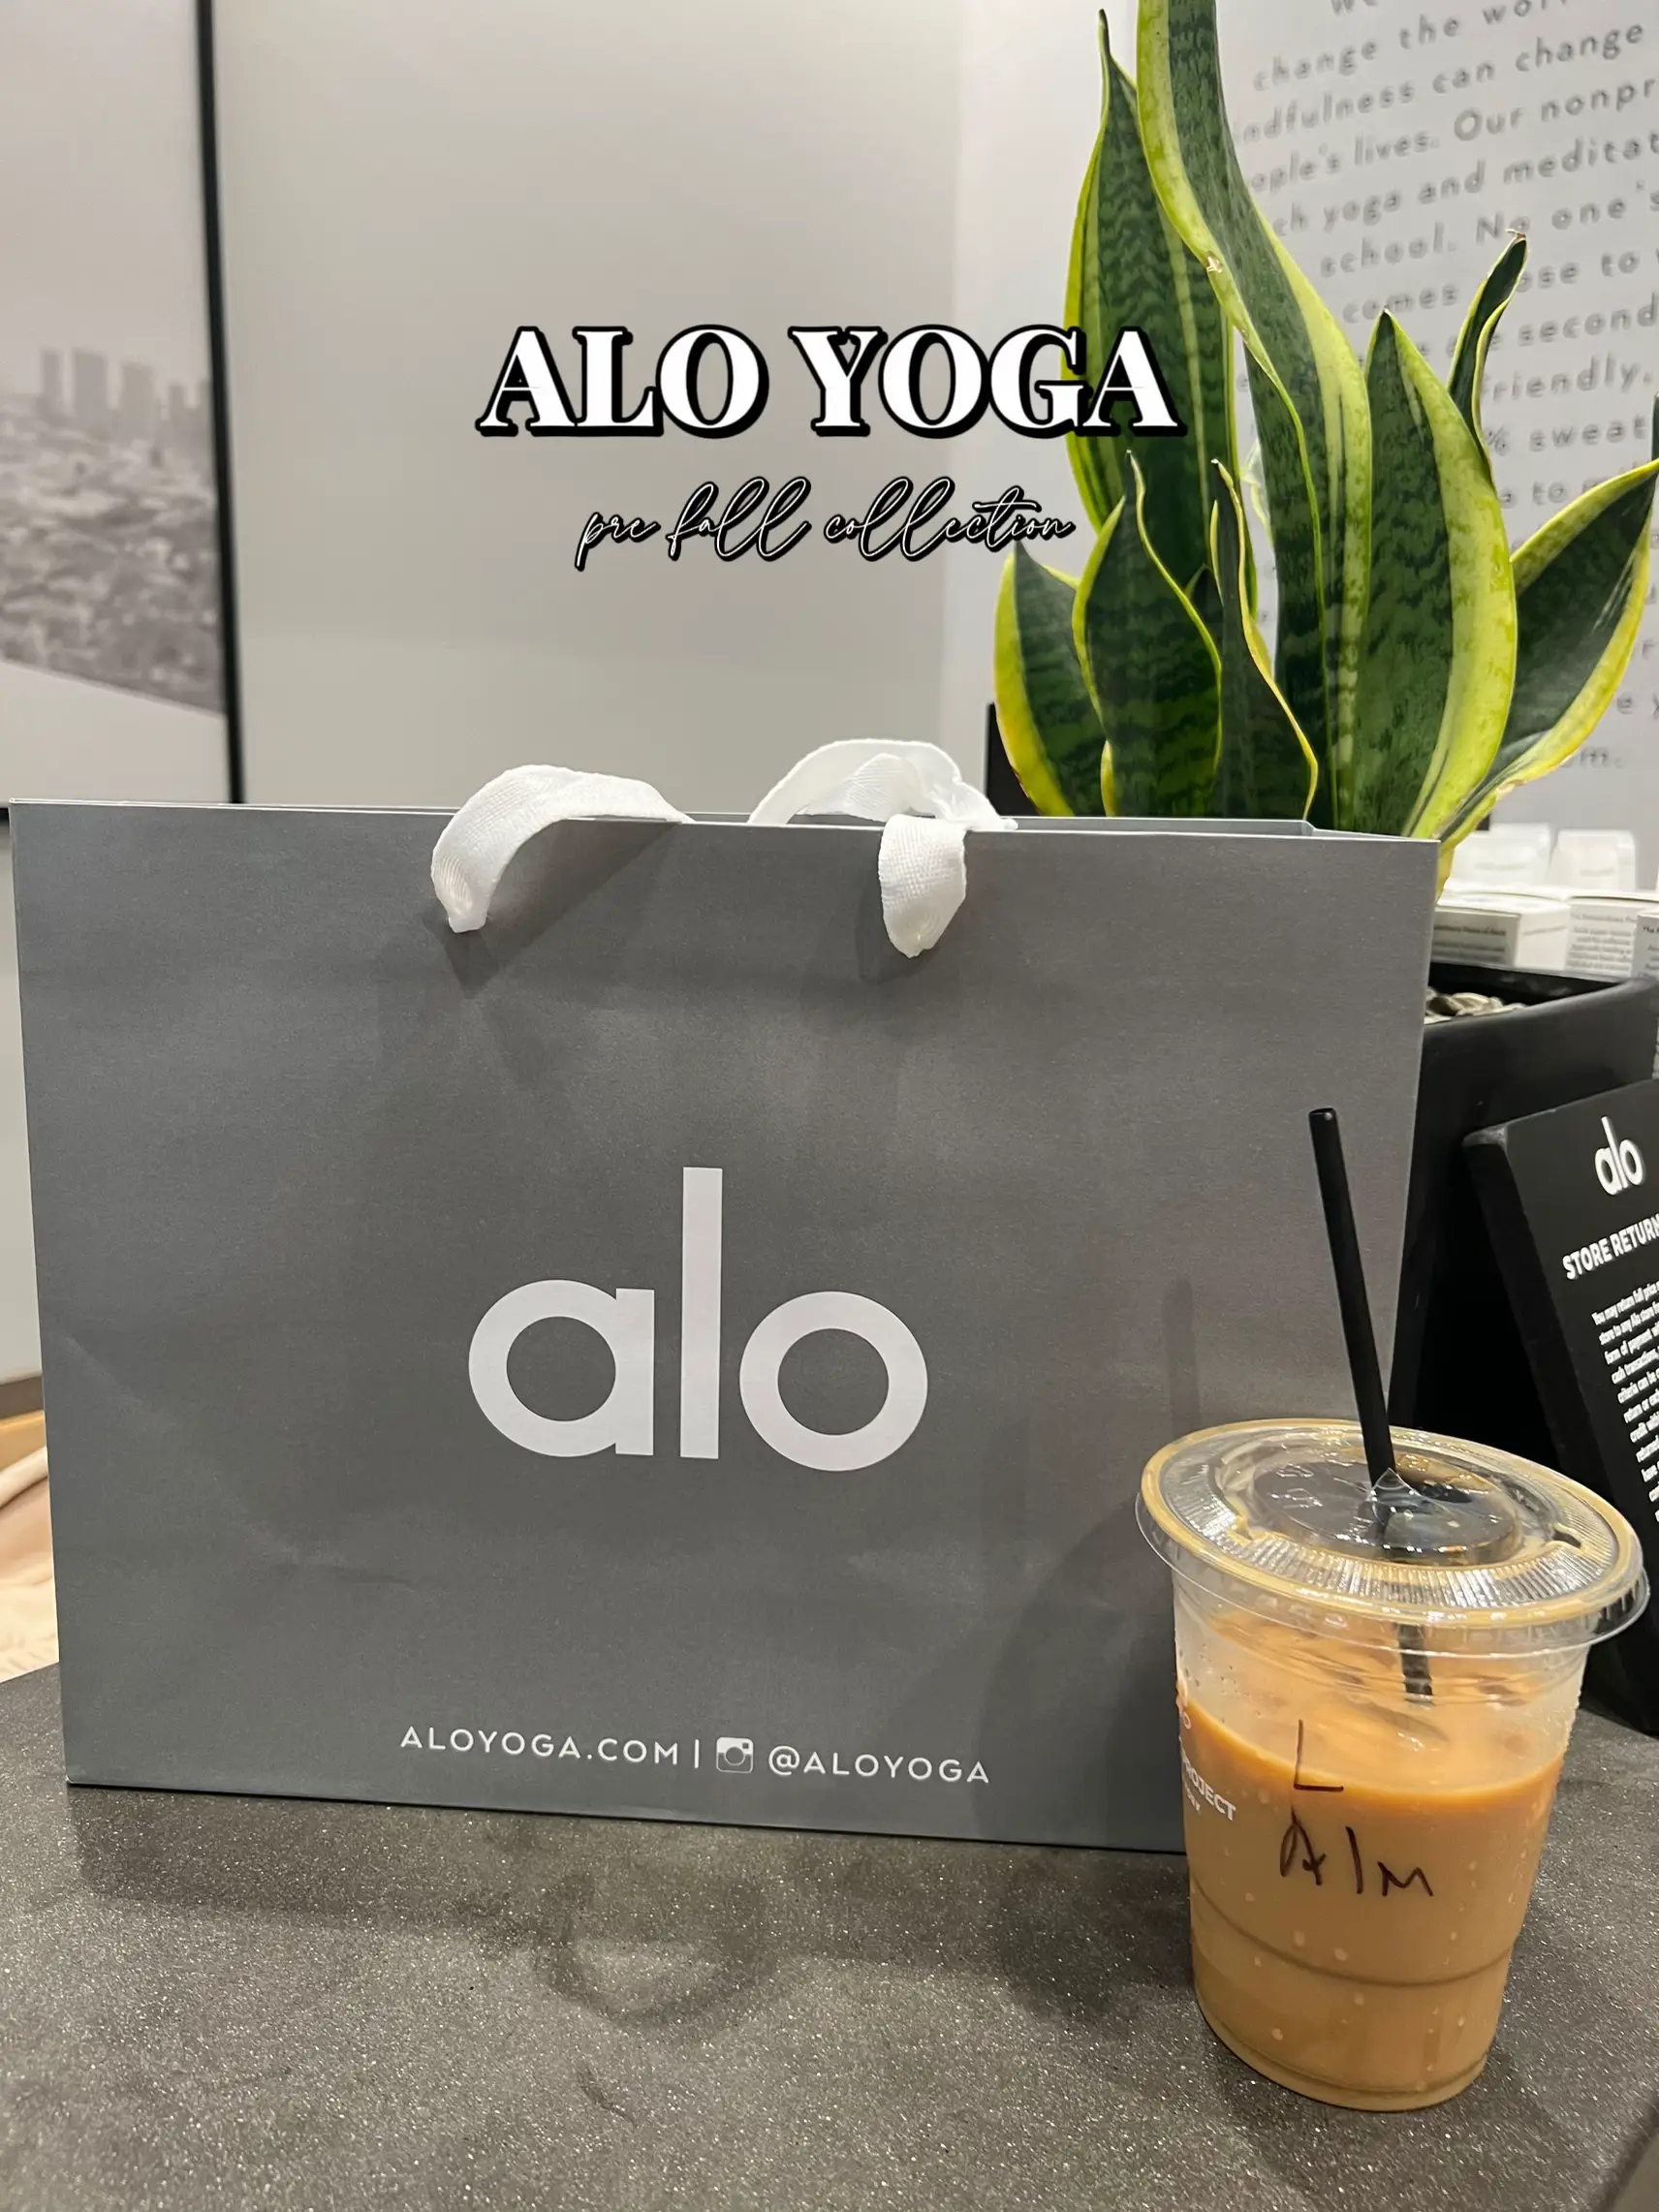 Alo yoga paper bag - Depop